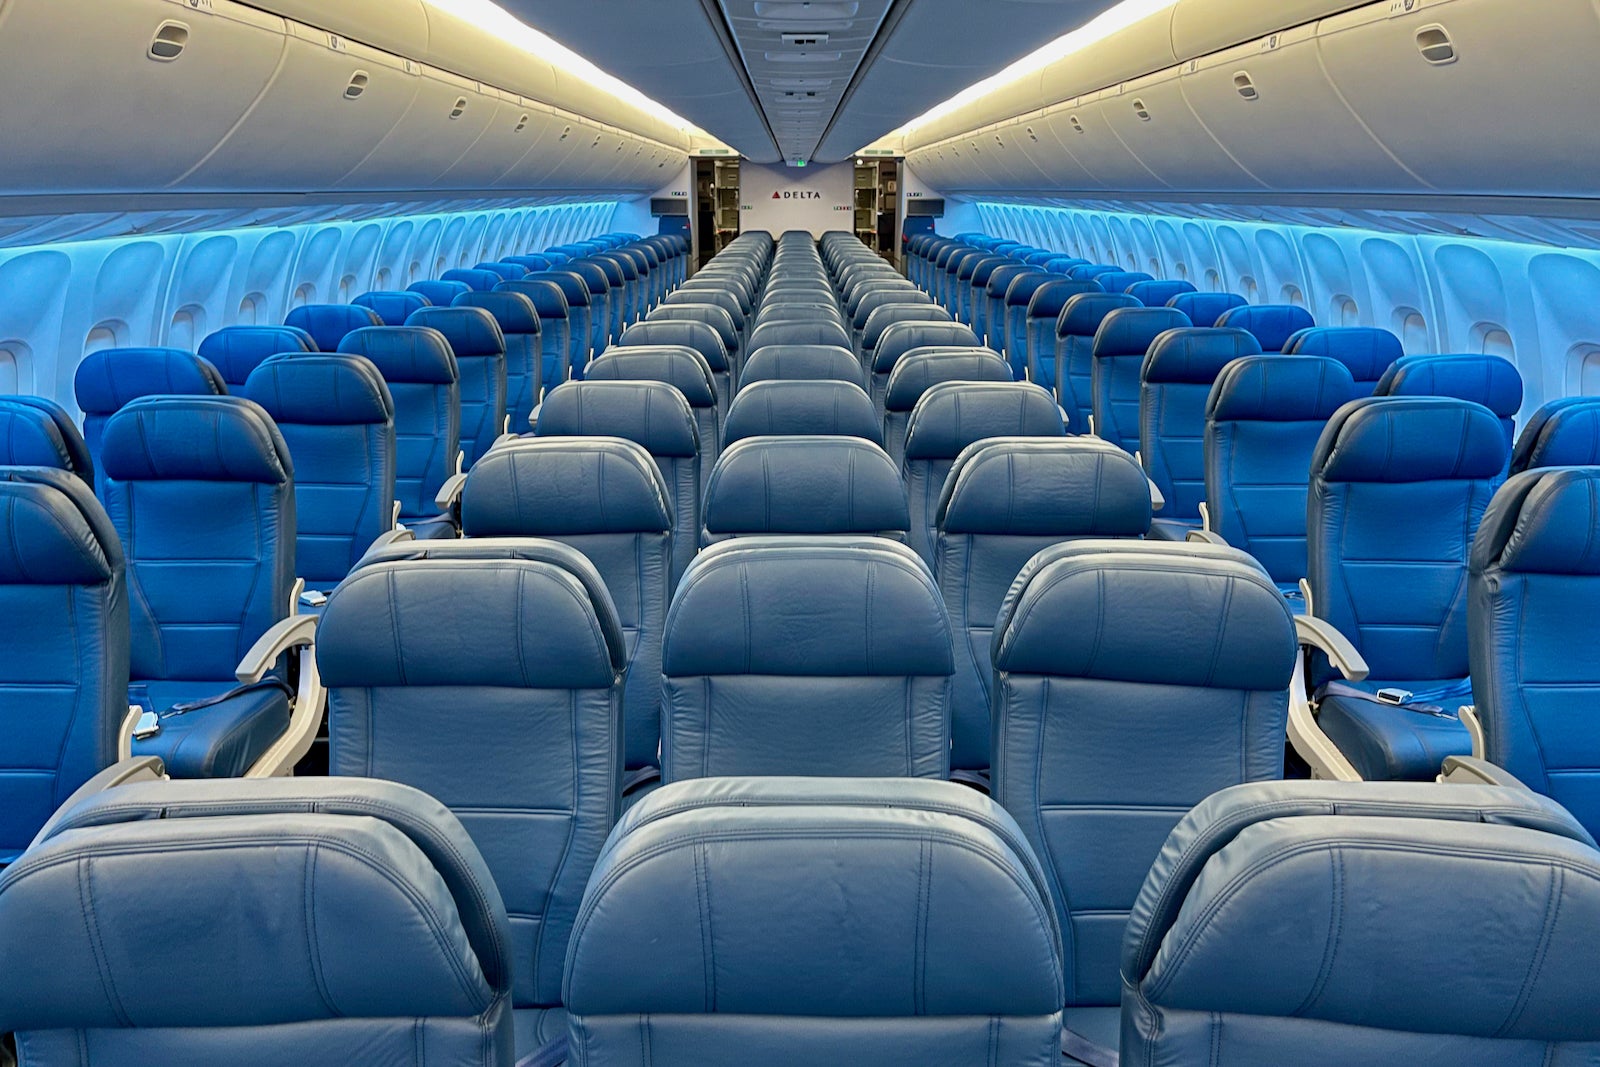 delta 767 seating chart international